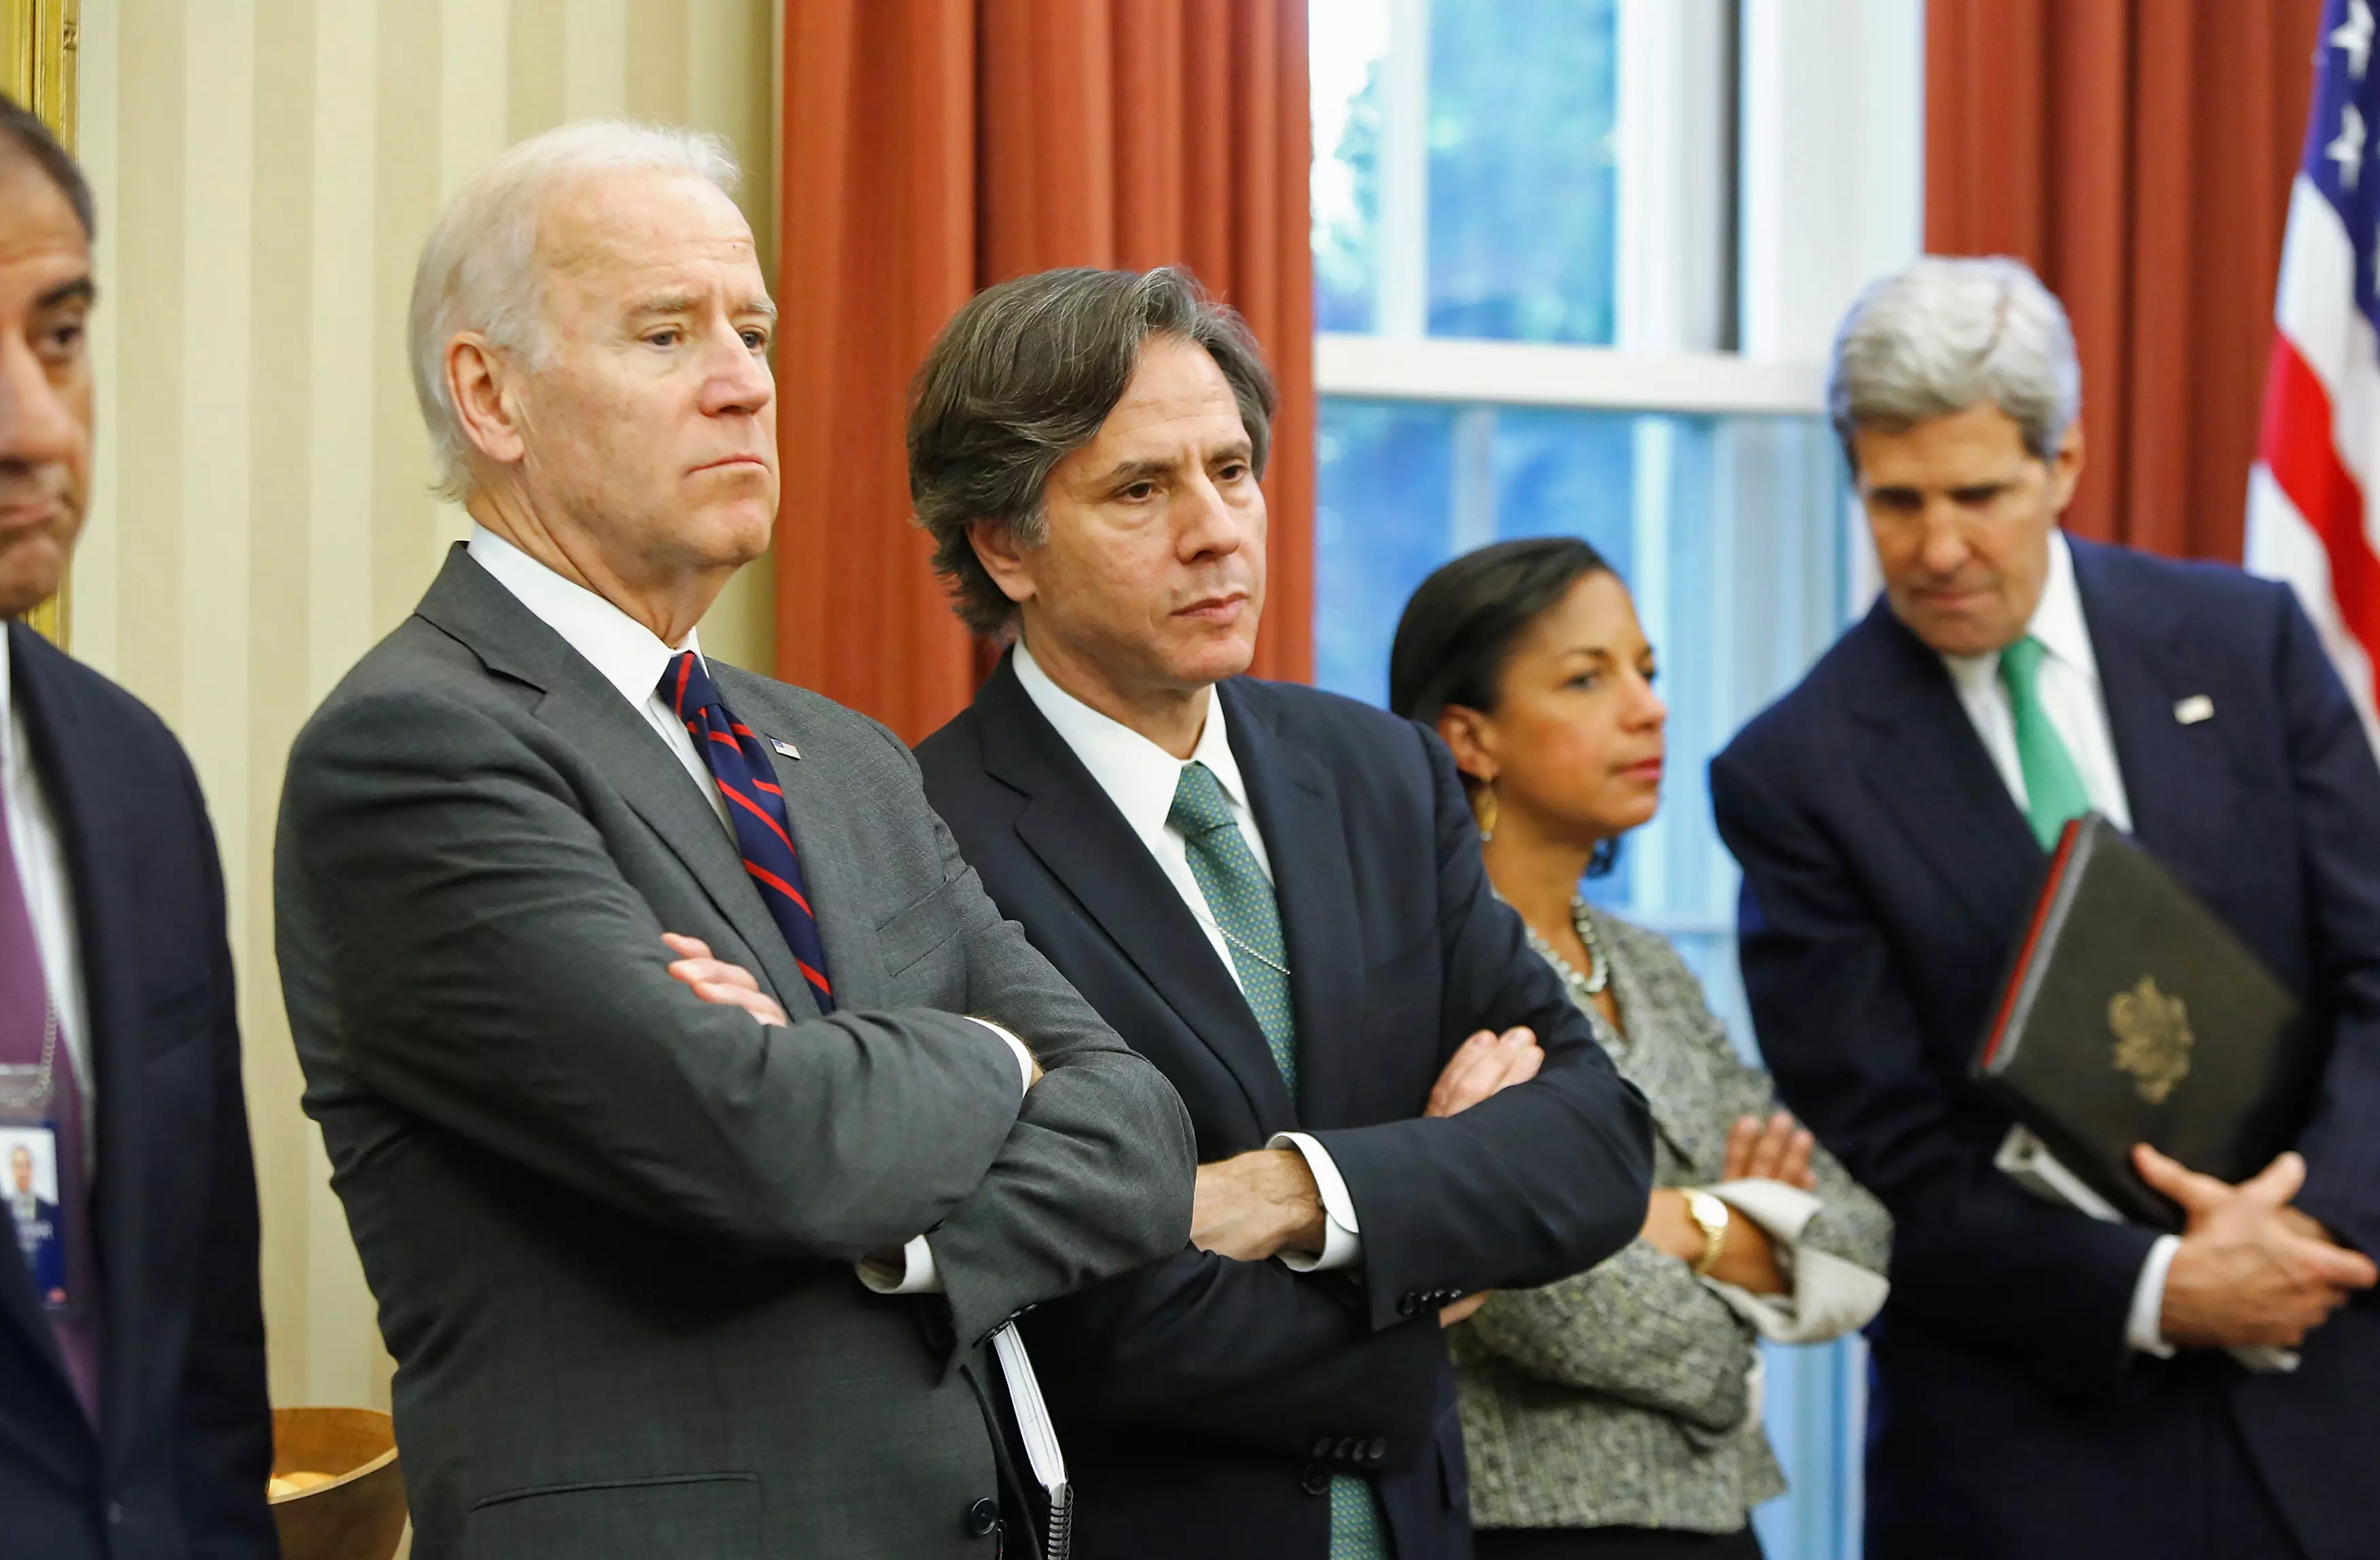 Джо Байден, Тони Блинкен, Сьюзан Райс и Джон Керри. Фото: REUTERS/Jonathan Ernst